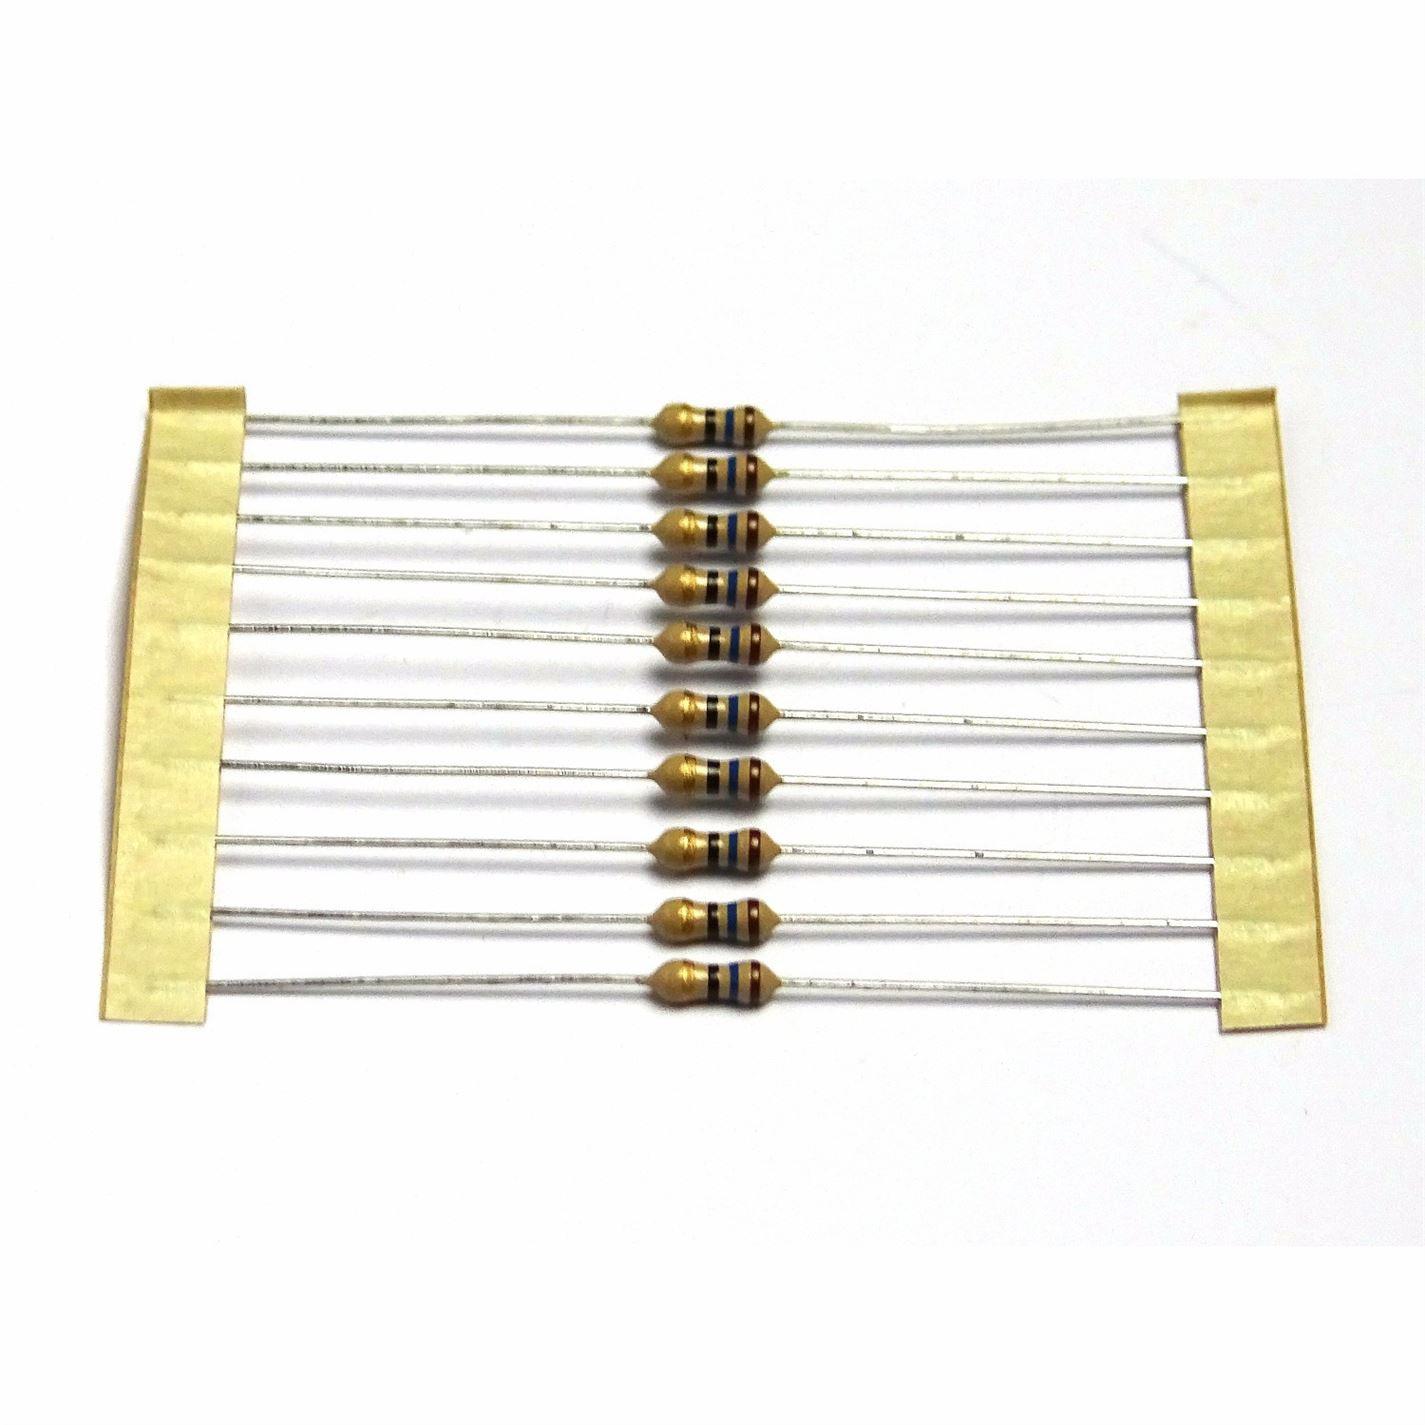 10 x Resistors 16 ohm ohms 1/4w 0.25w 5% Carbon Film - UK Seller